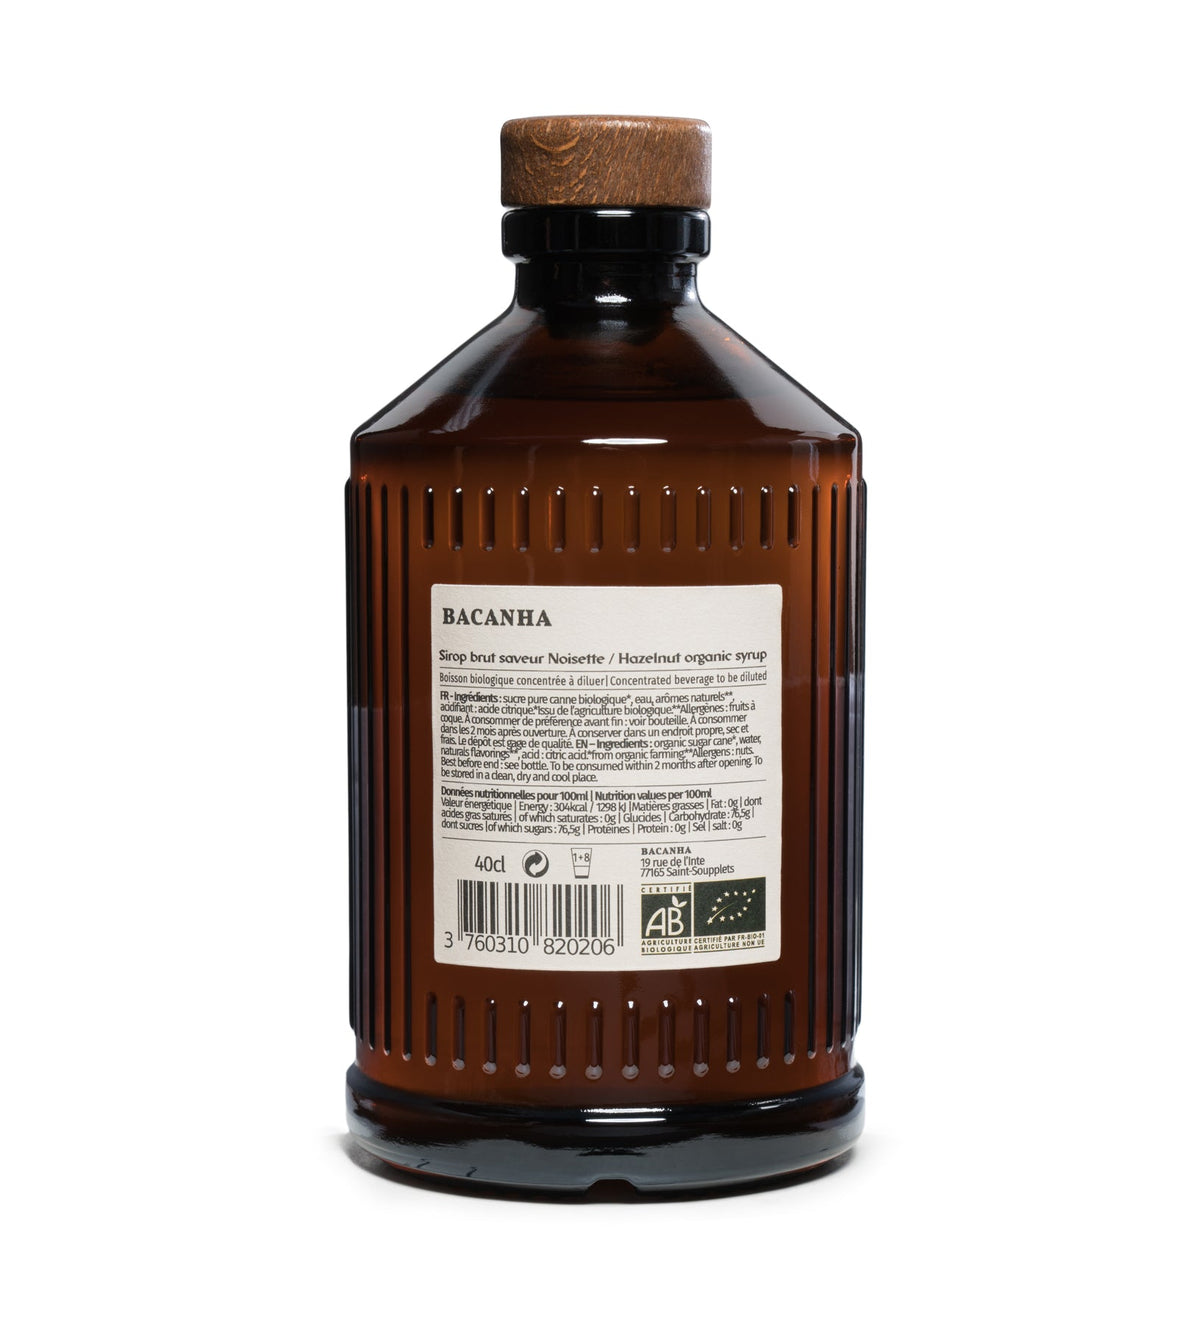 &lt;tc&gt;Bacanha Hazelnut flavored syrup [ORGANIC]&lt;/tc&gt;